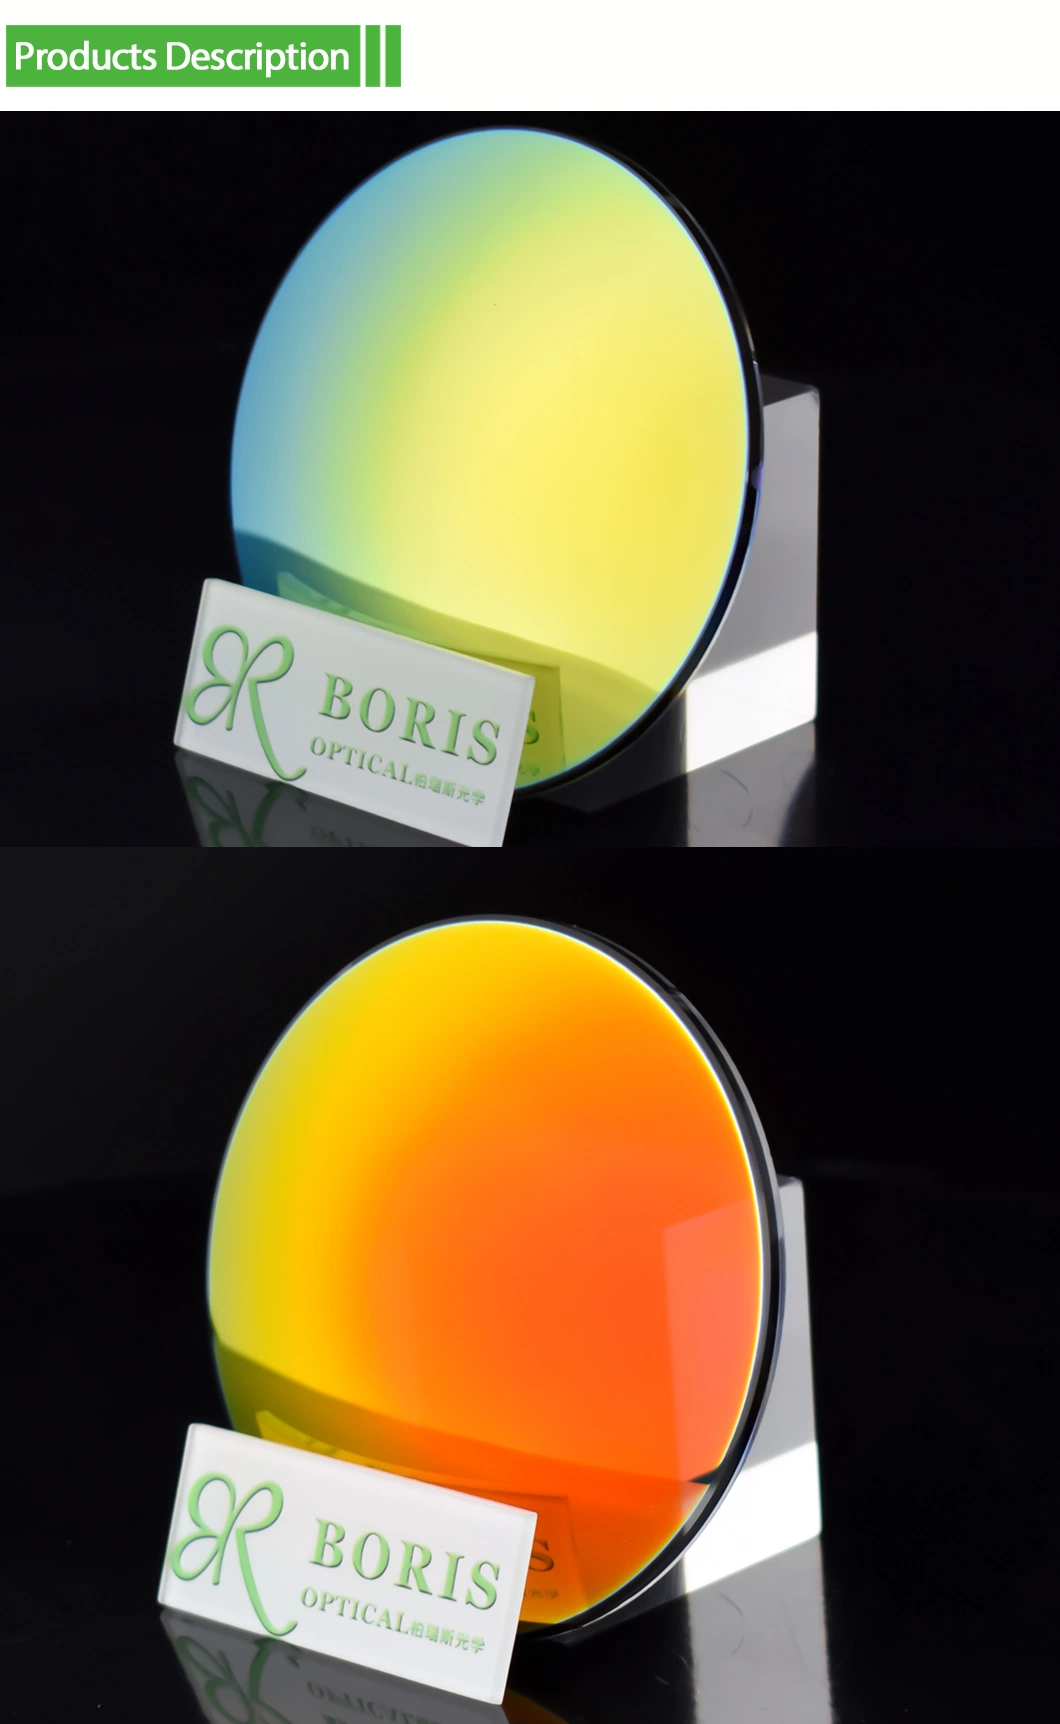 1.49 Mirror Polarized Sunglasses Optical Lens China Manufacture